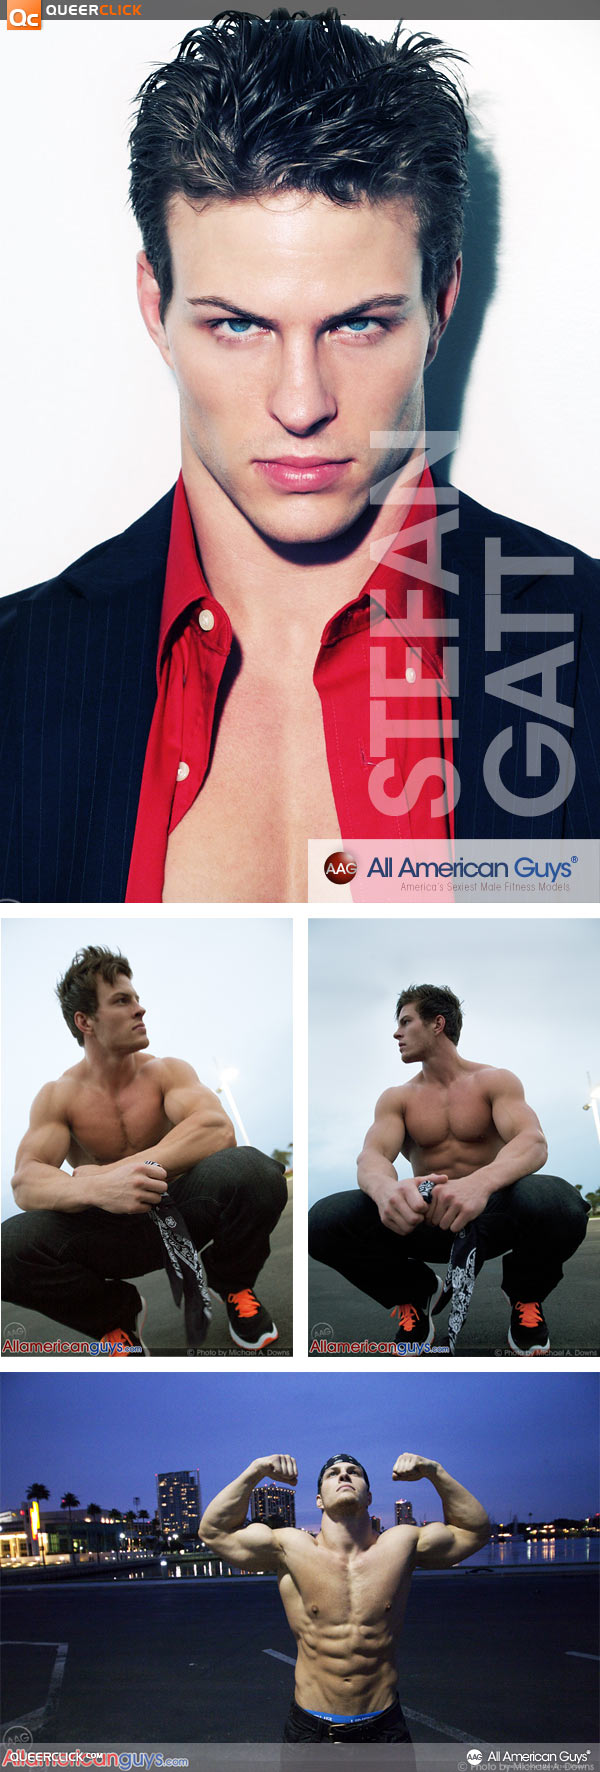 All American Guys: Stefan Gatt